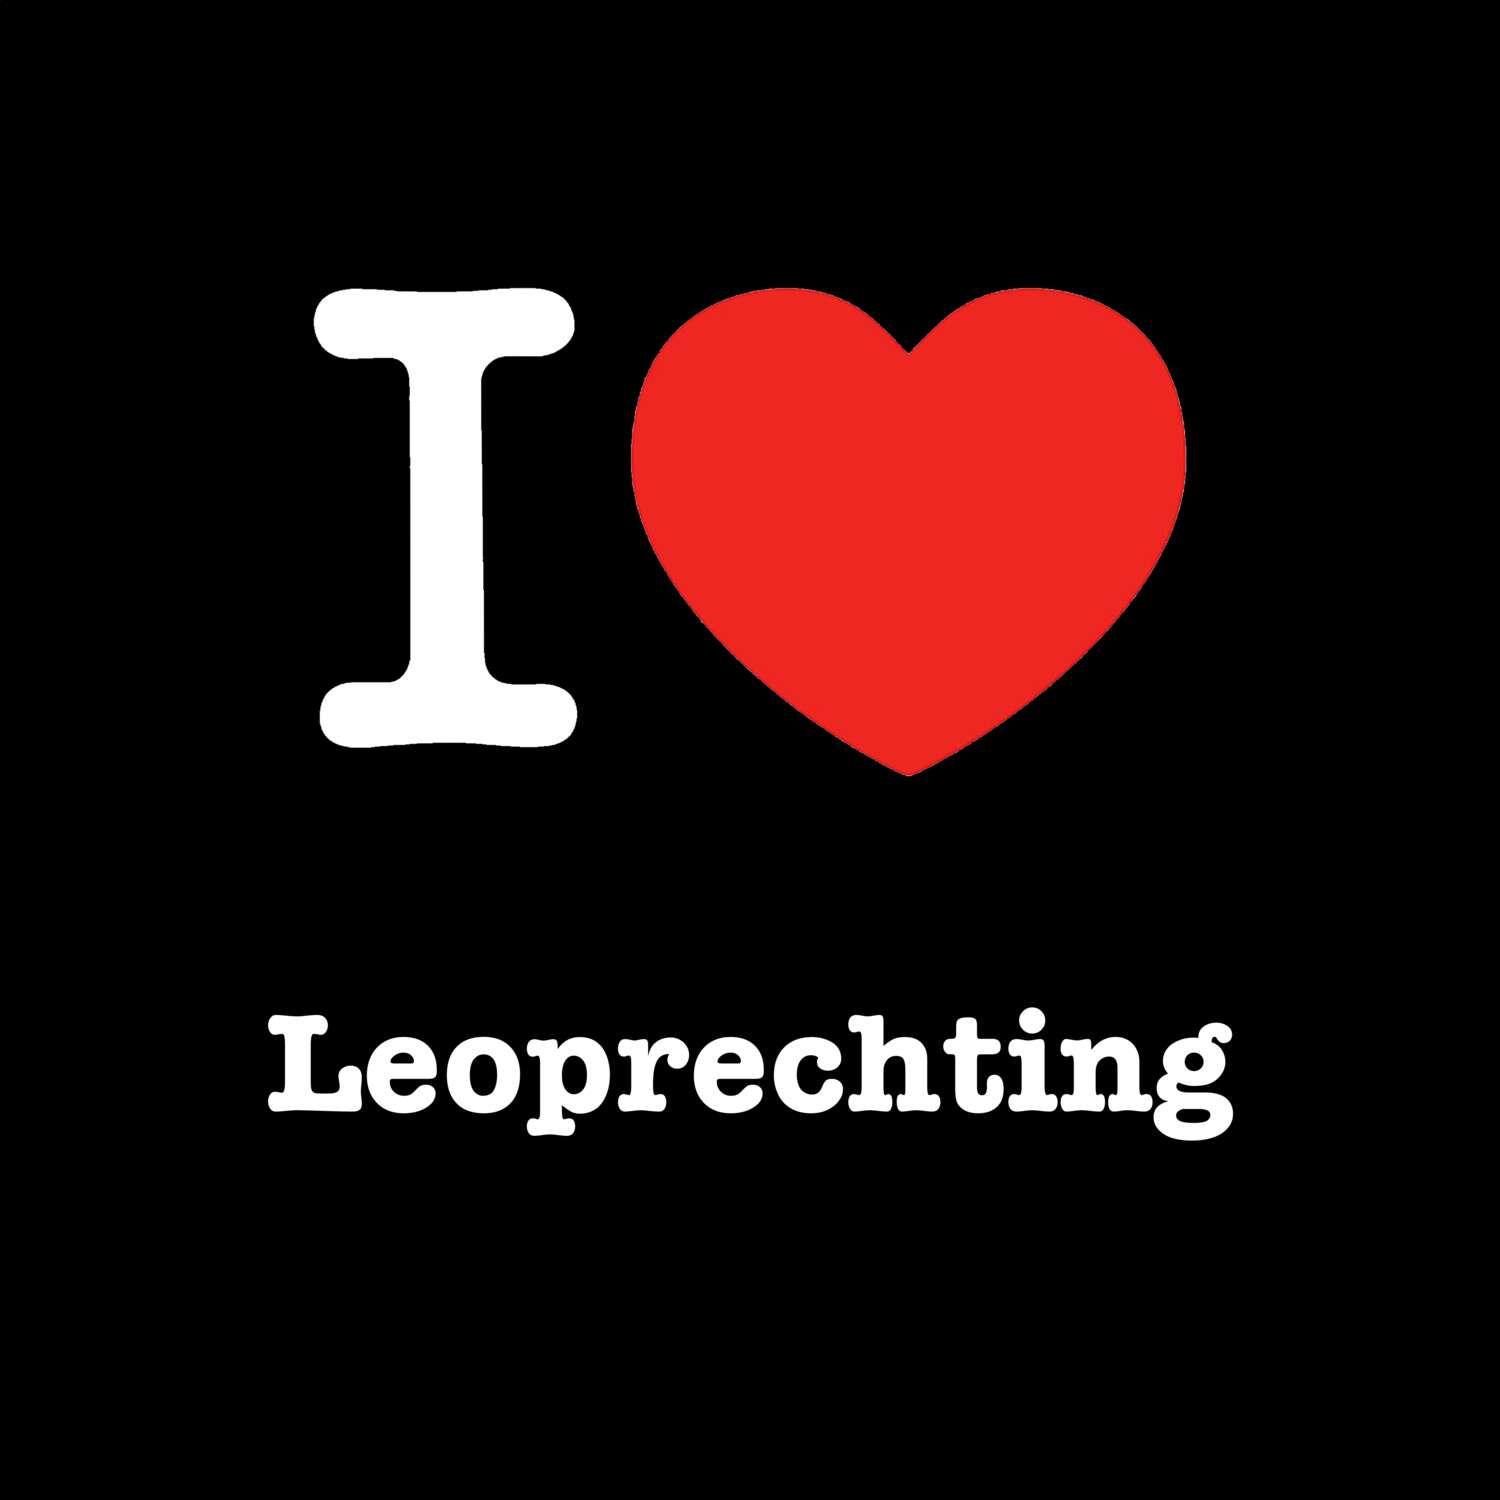 Leoprechting T-Shirt »I love«